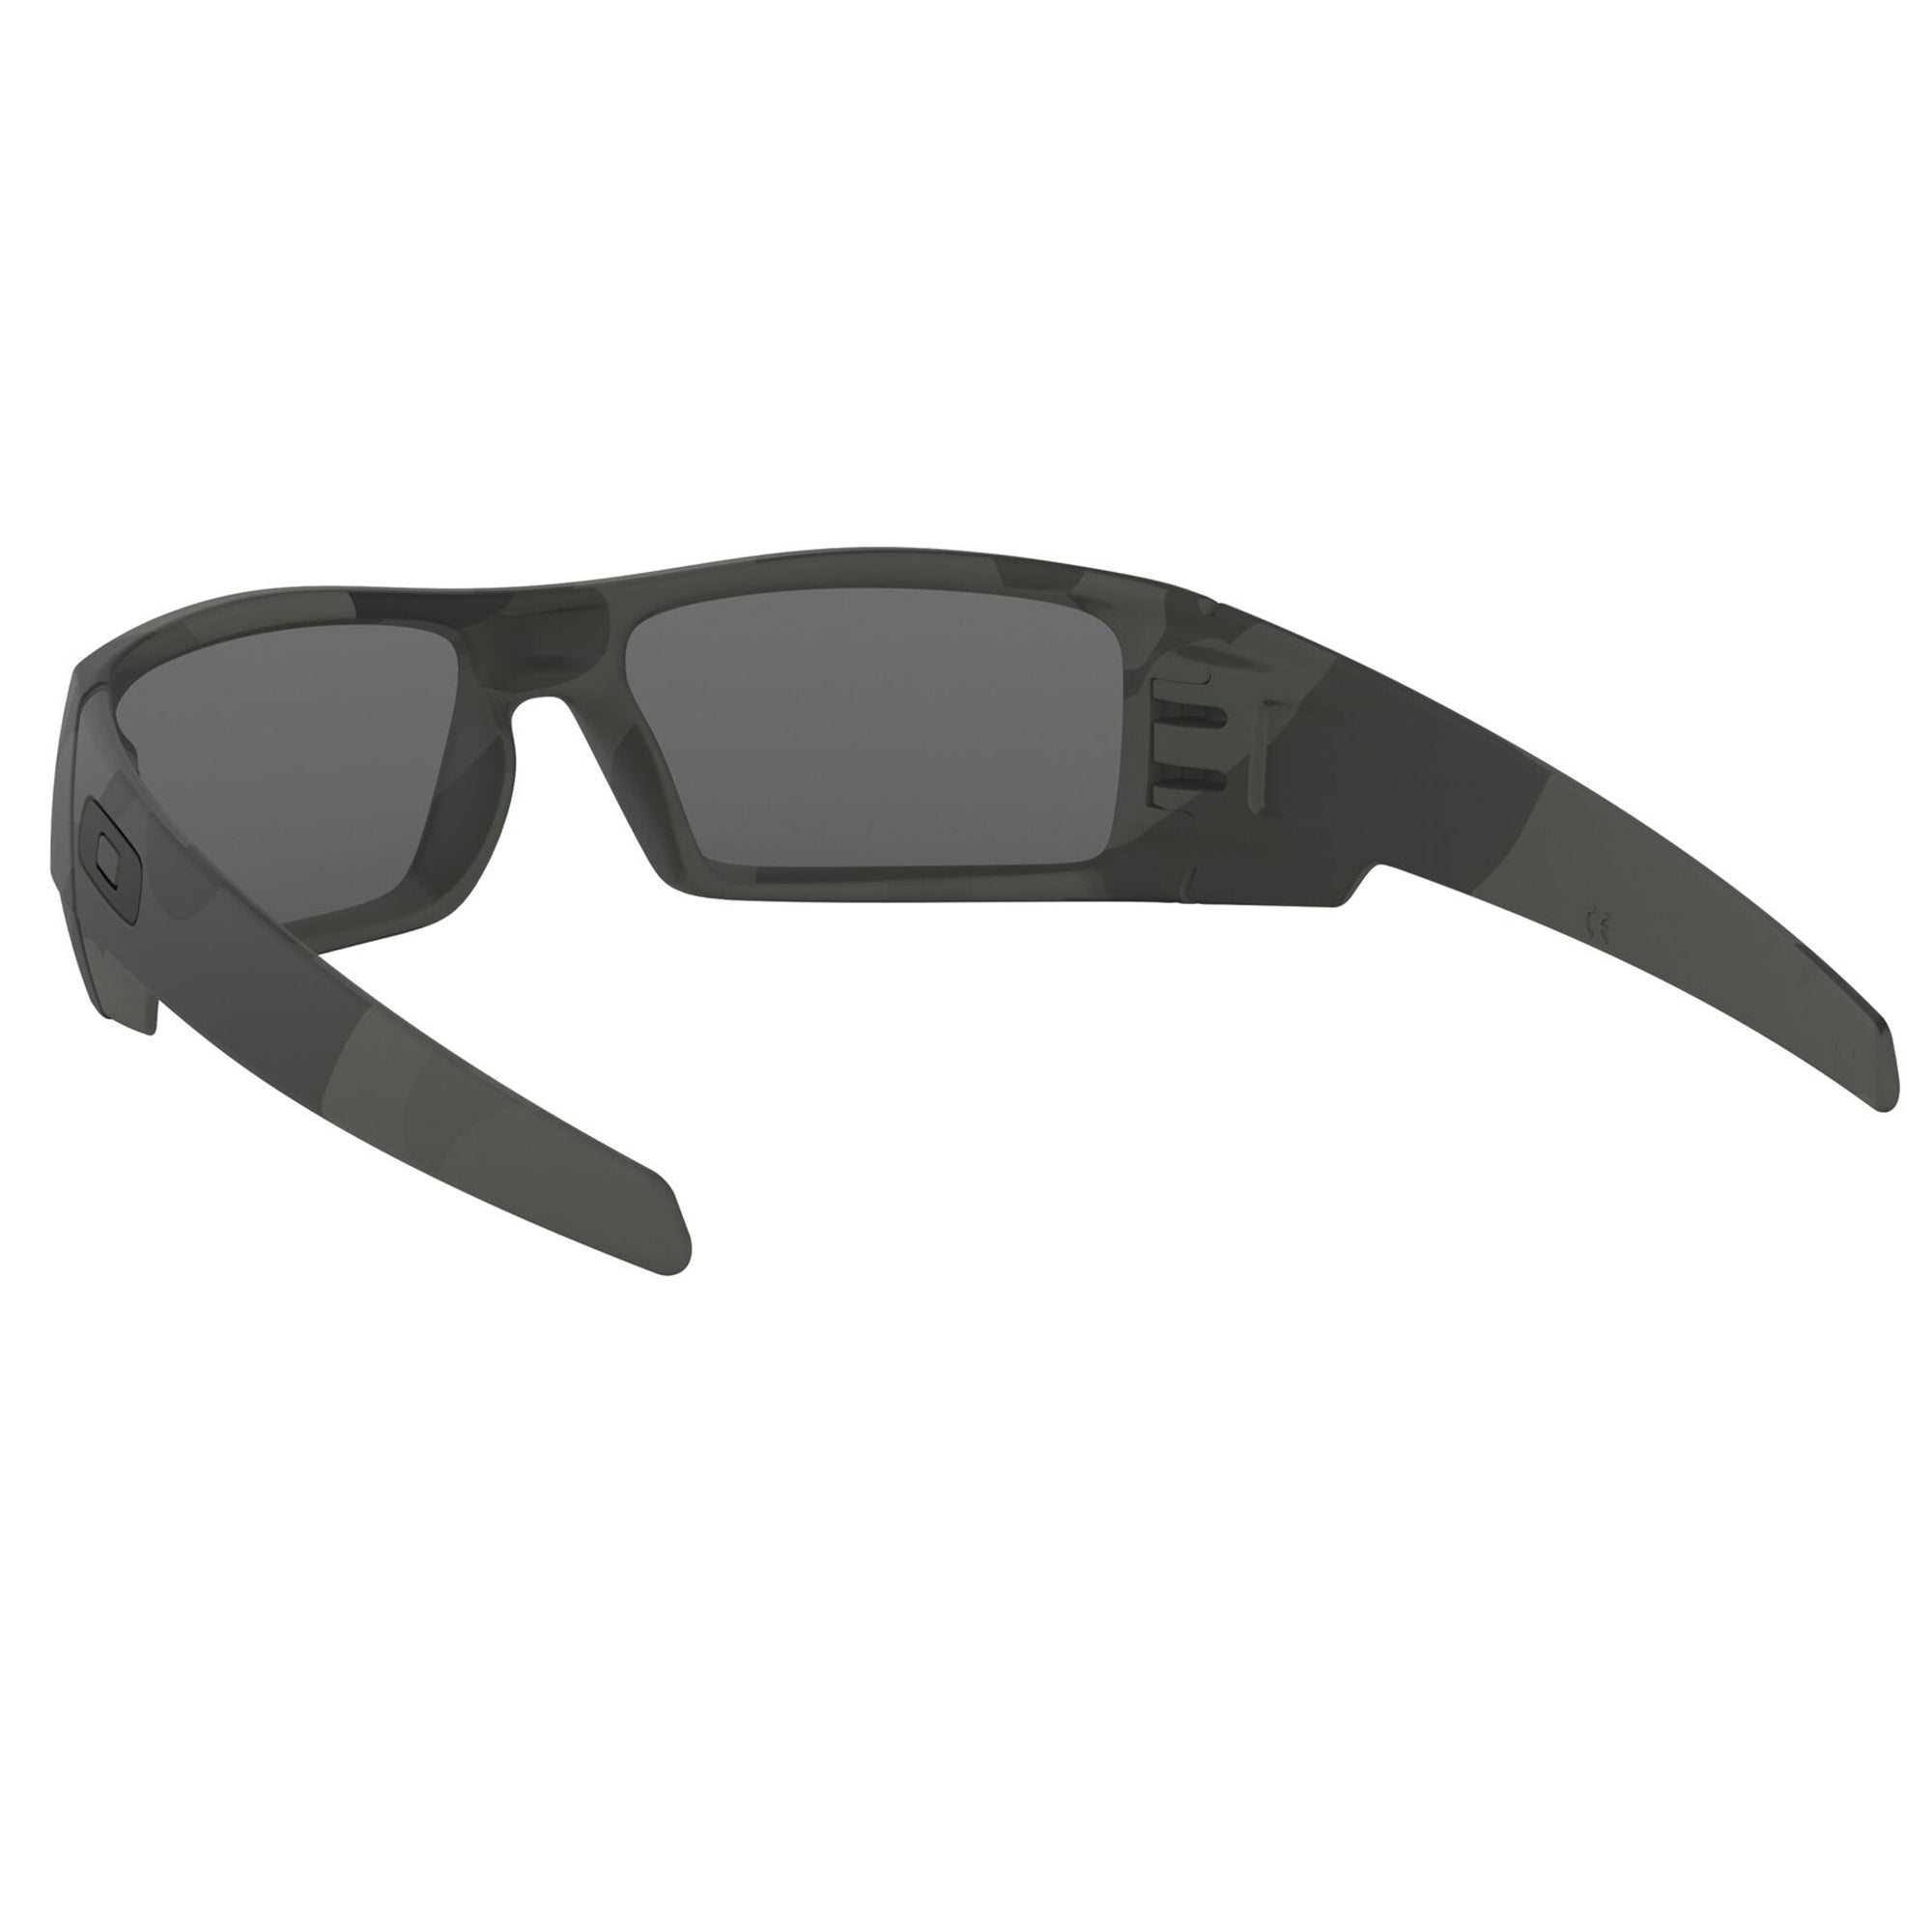 Oakley OO9014-03 Standard Issue Gascan Sunglasses Multicam Black Frame Grey Polarized Lens